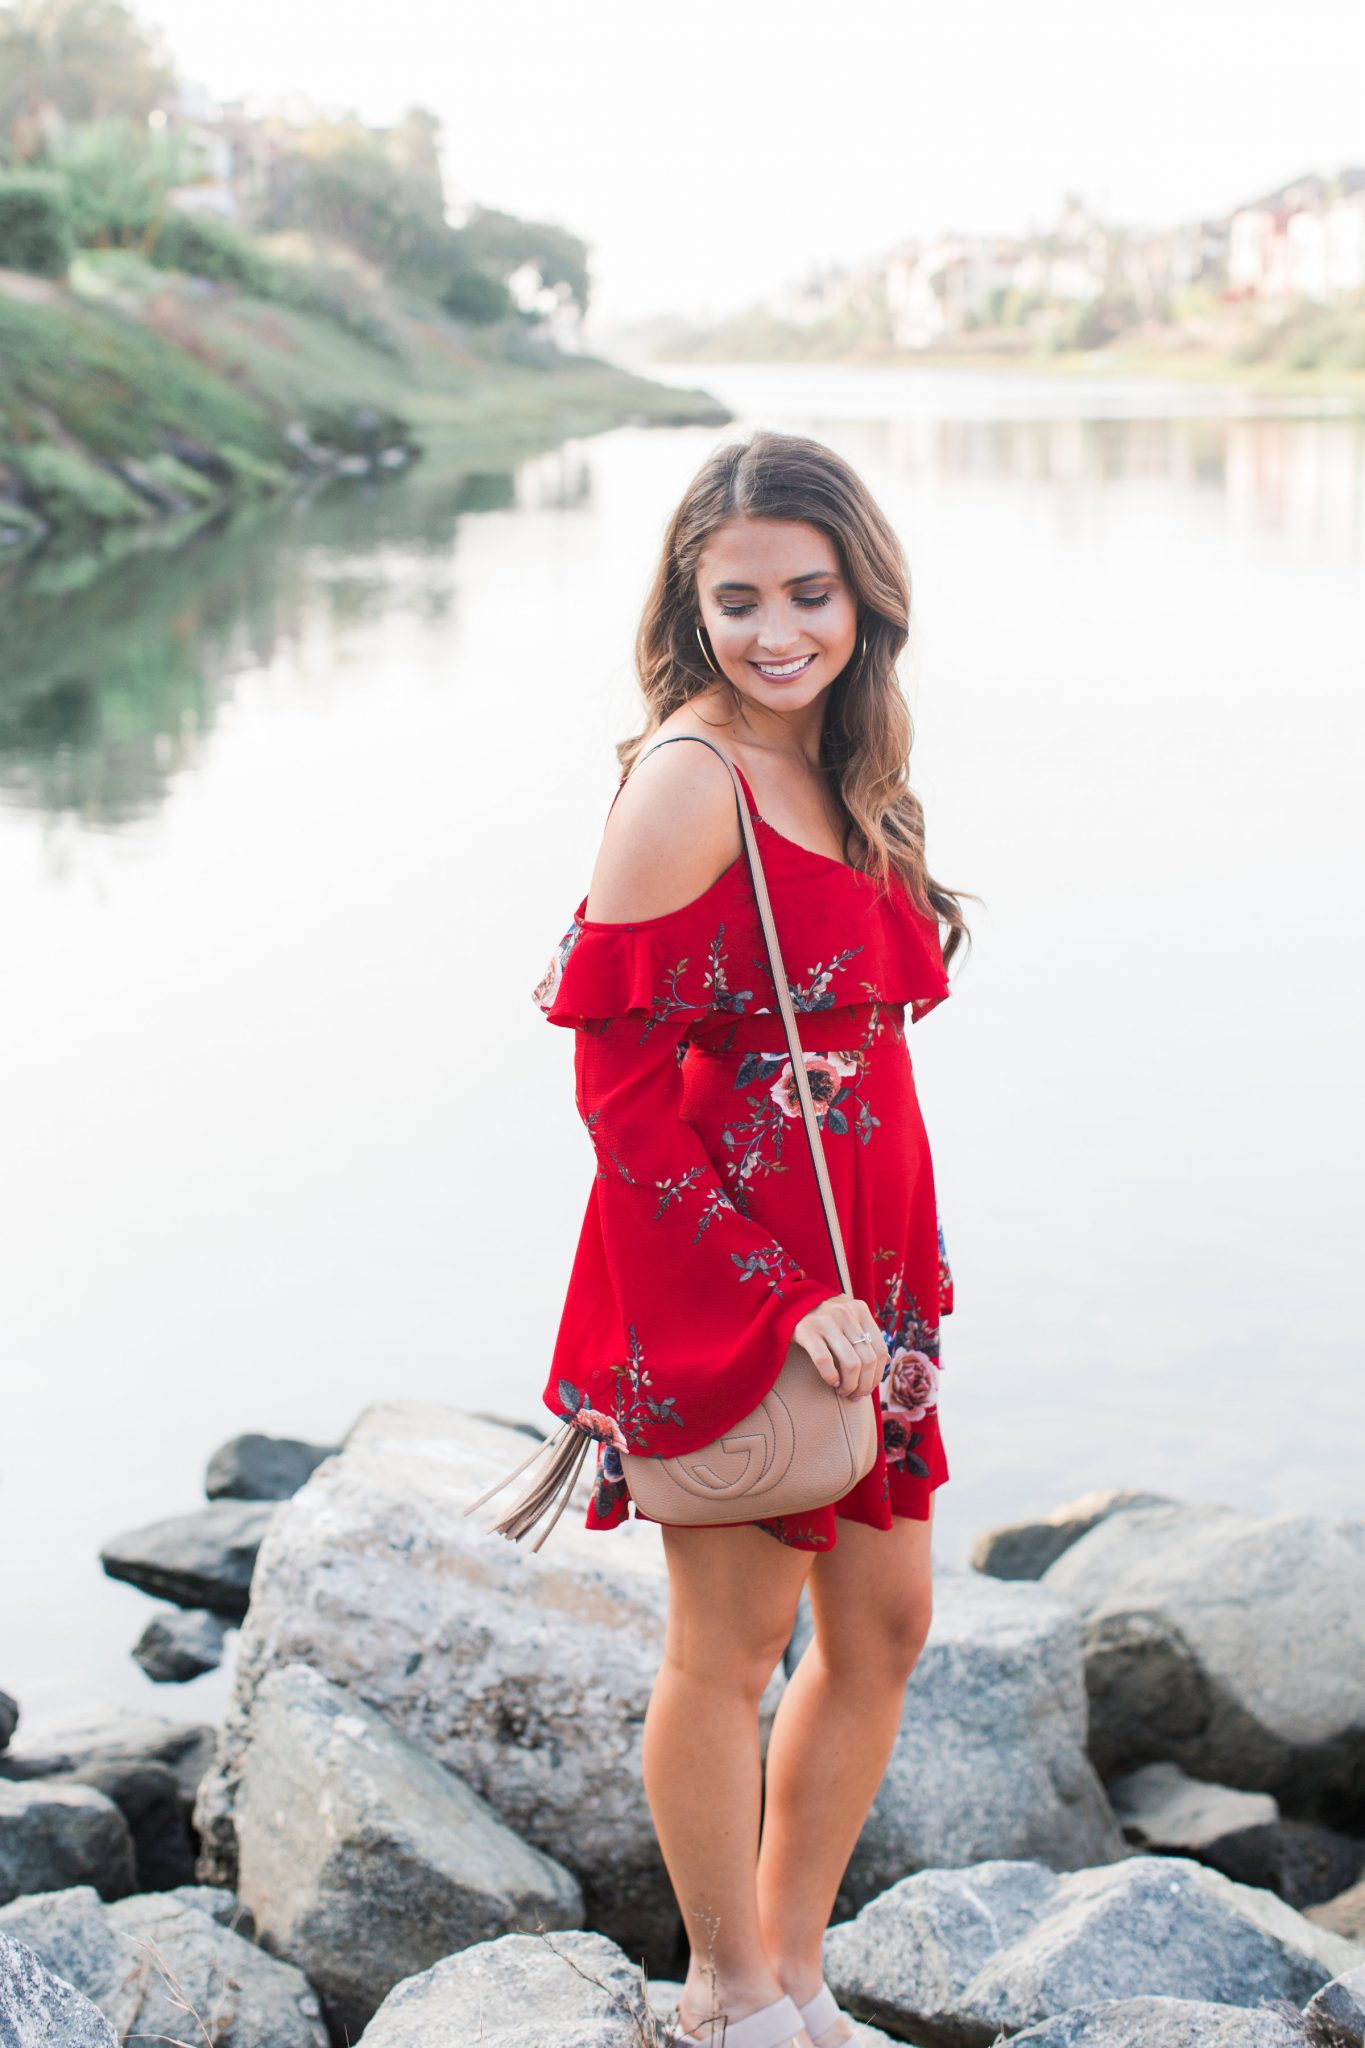 Maxie Elle | Red floral dress - Santa Barbara Getaway featured by popular Orange County travel blogger, Maxie Elle